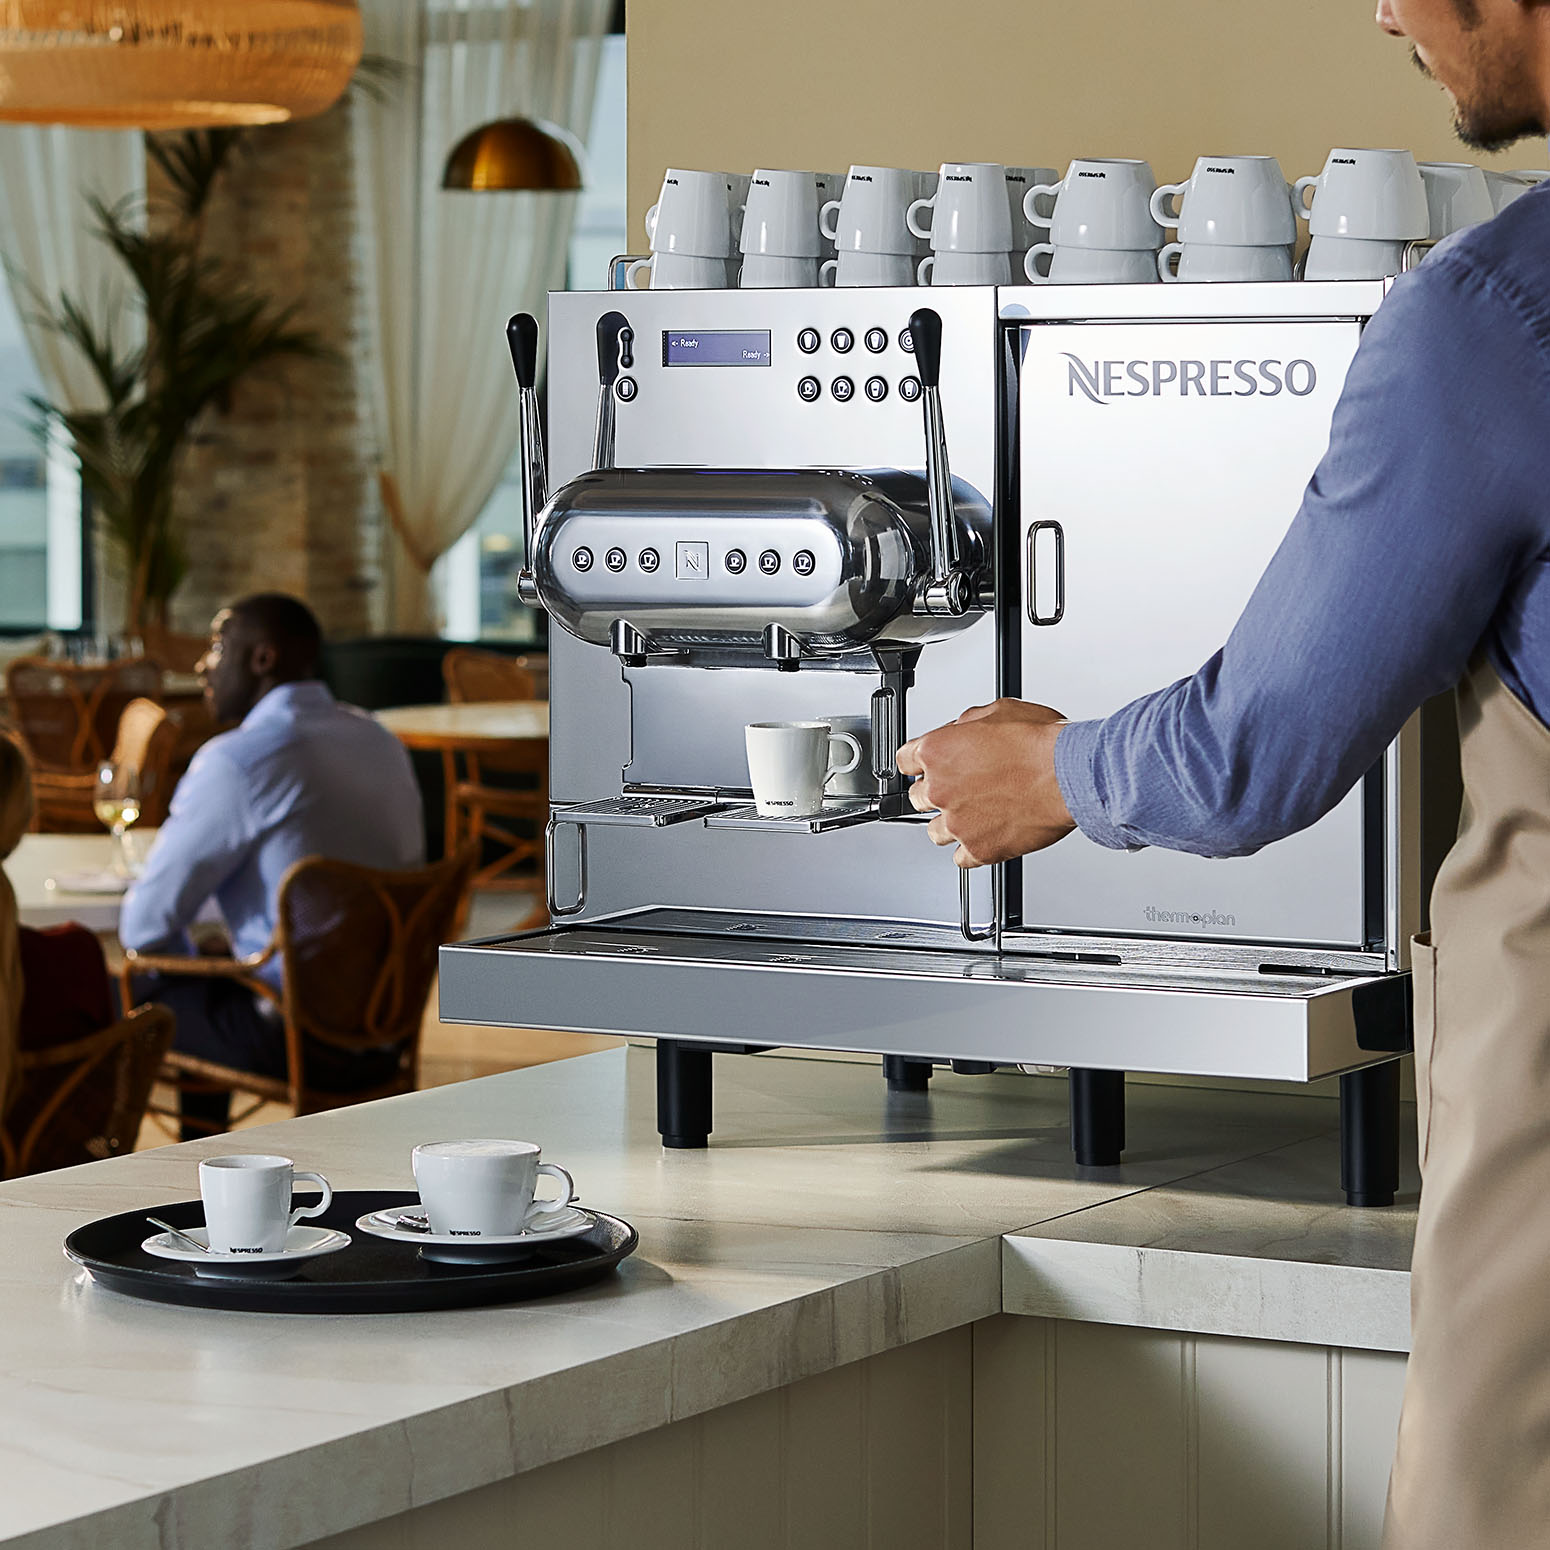 https://www.nespresso.com/shared_res/mos/free_html/my/B2B-What-kind-of-nespresso-machine-should-you-get/006A-Aguila-220.jpg